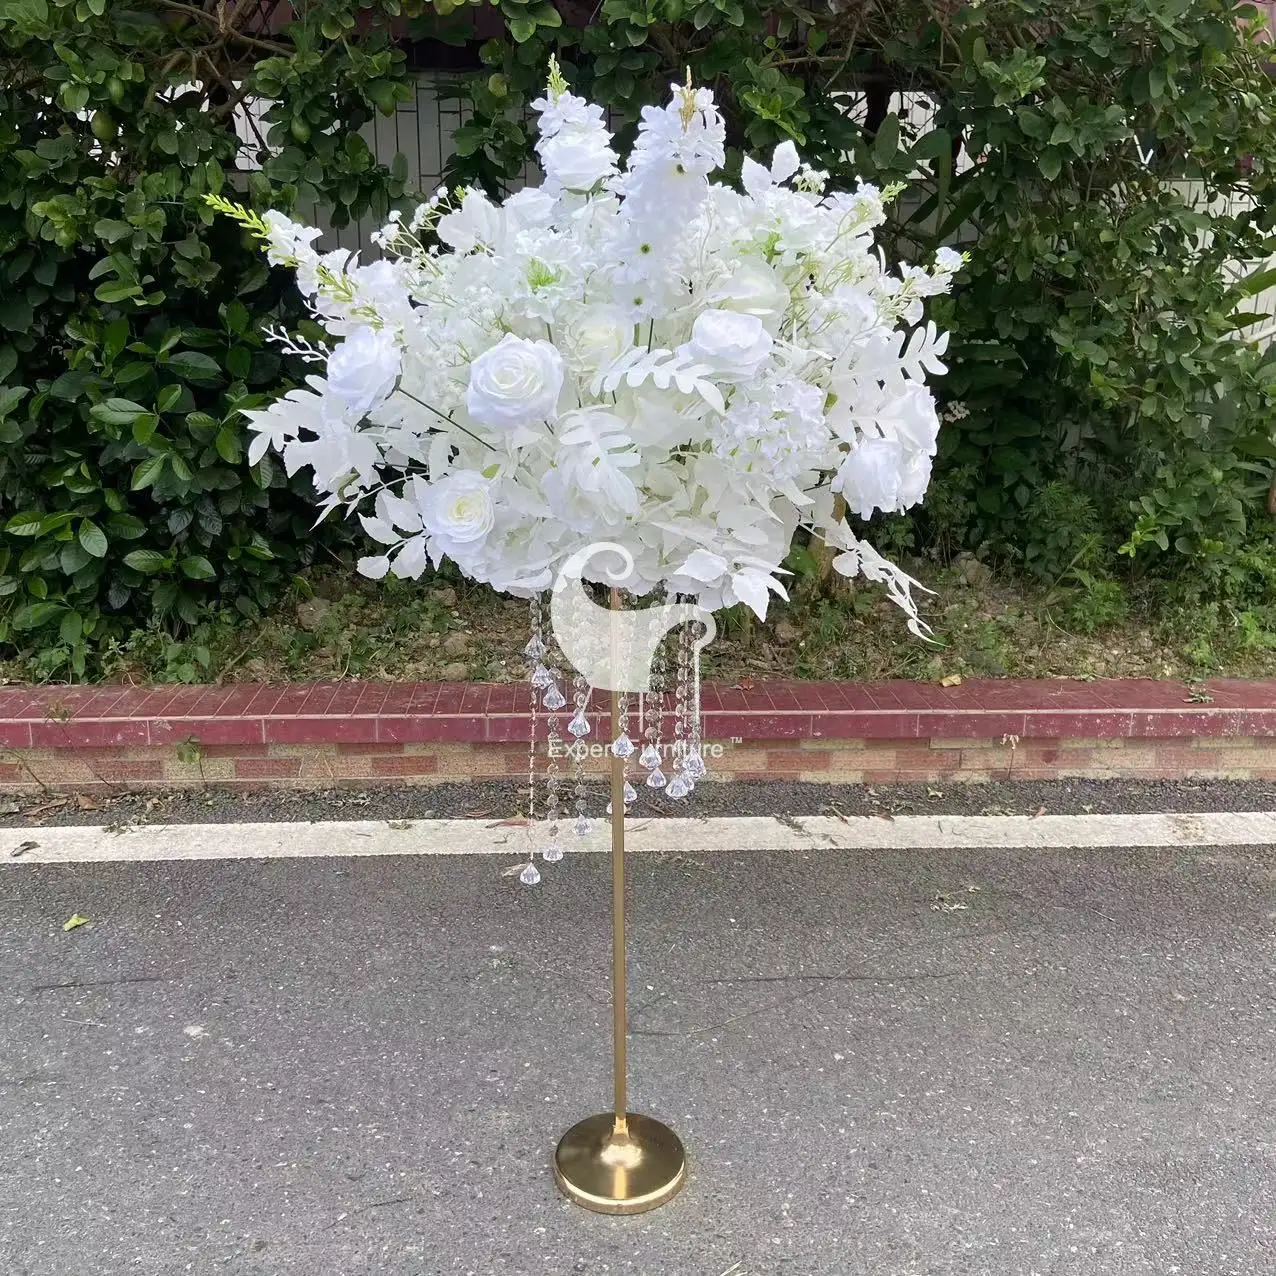 Hot selling wedding flower bouquet decoration white rose flower ball centerpiece